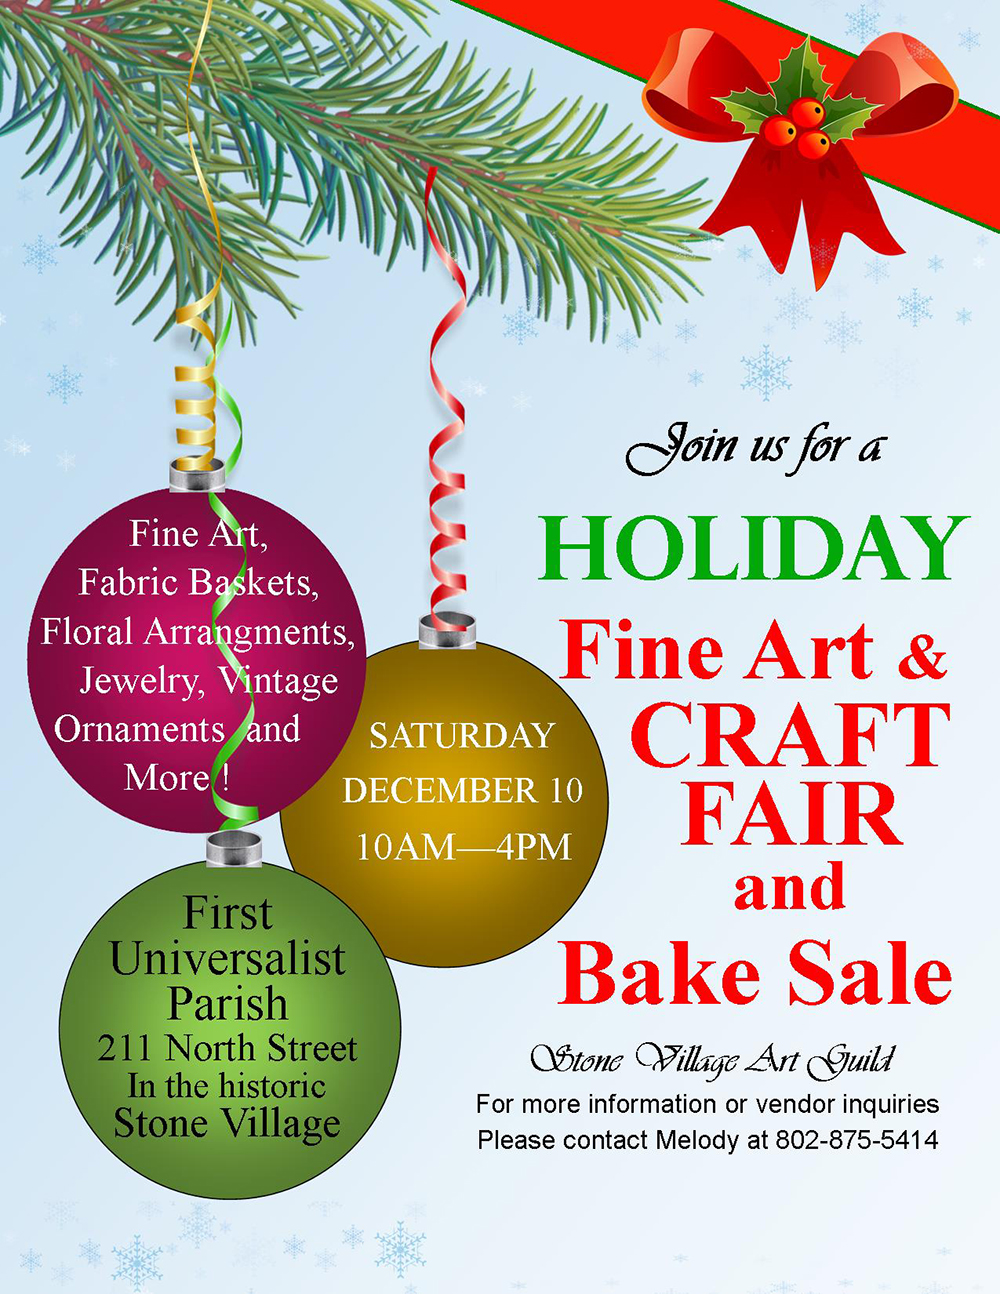 Holiday Fine Art, Craft Fair and Bake Sale Flyer